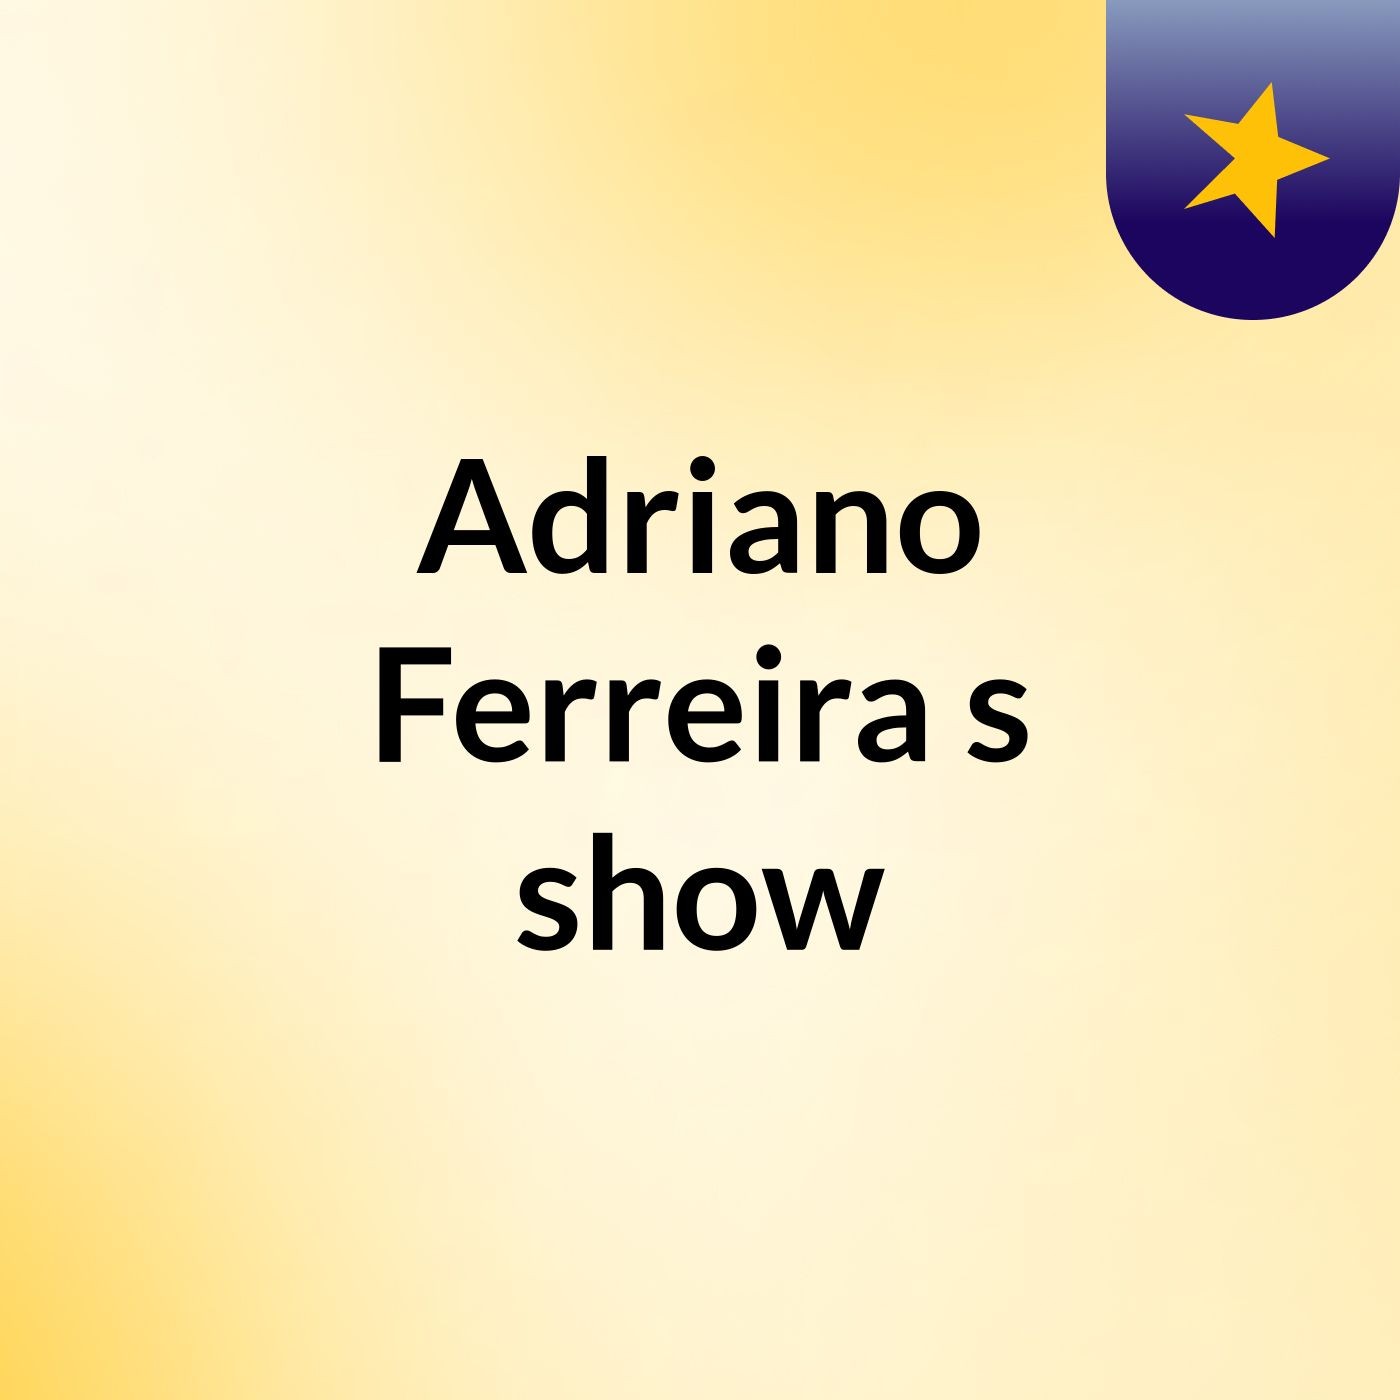 Adriano Ferreira's show